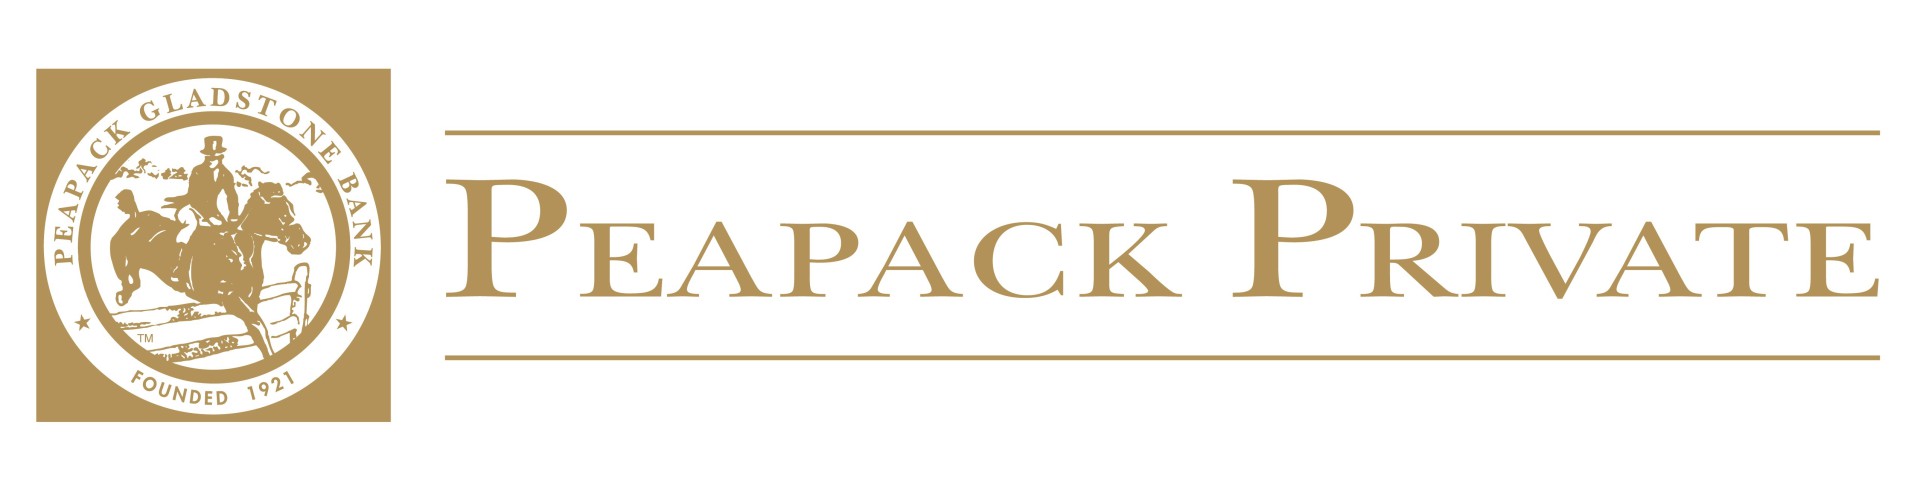 Peapack Private